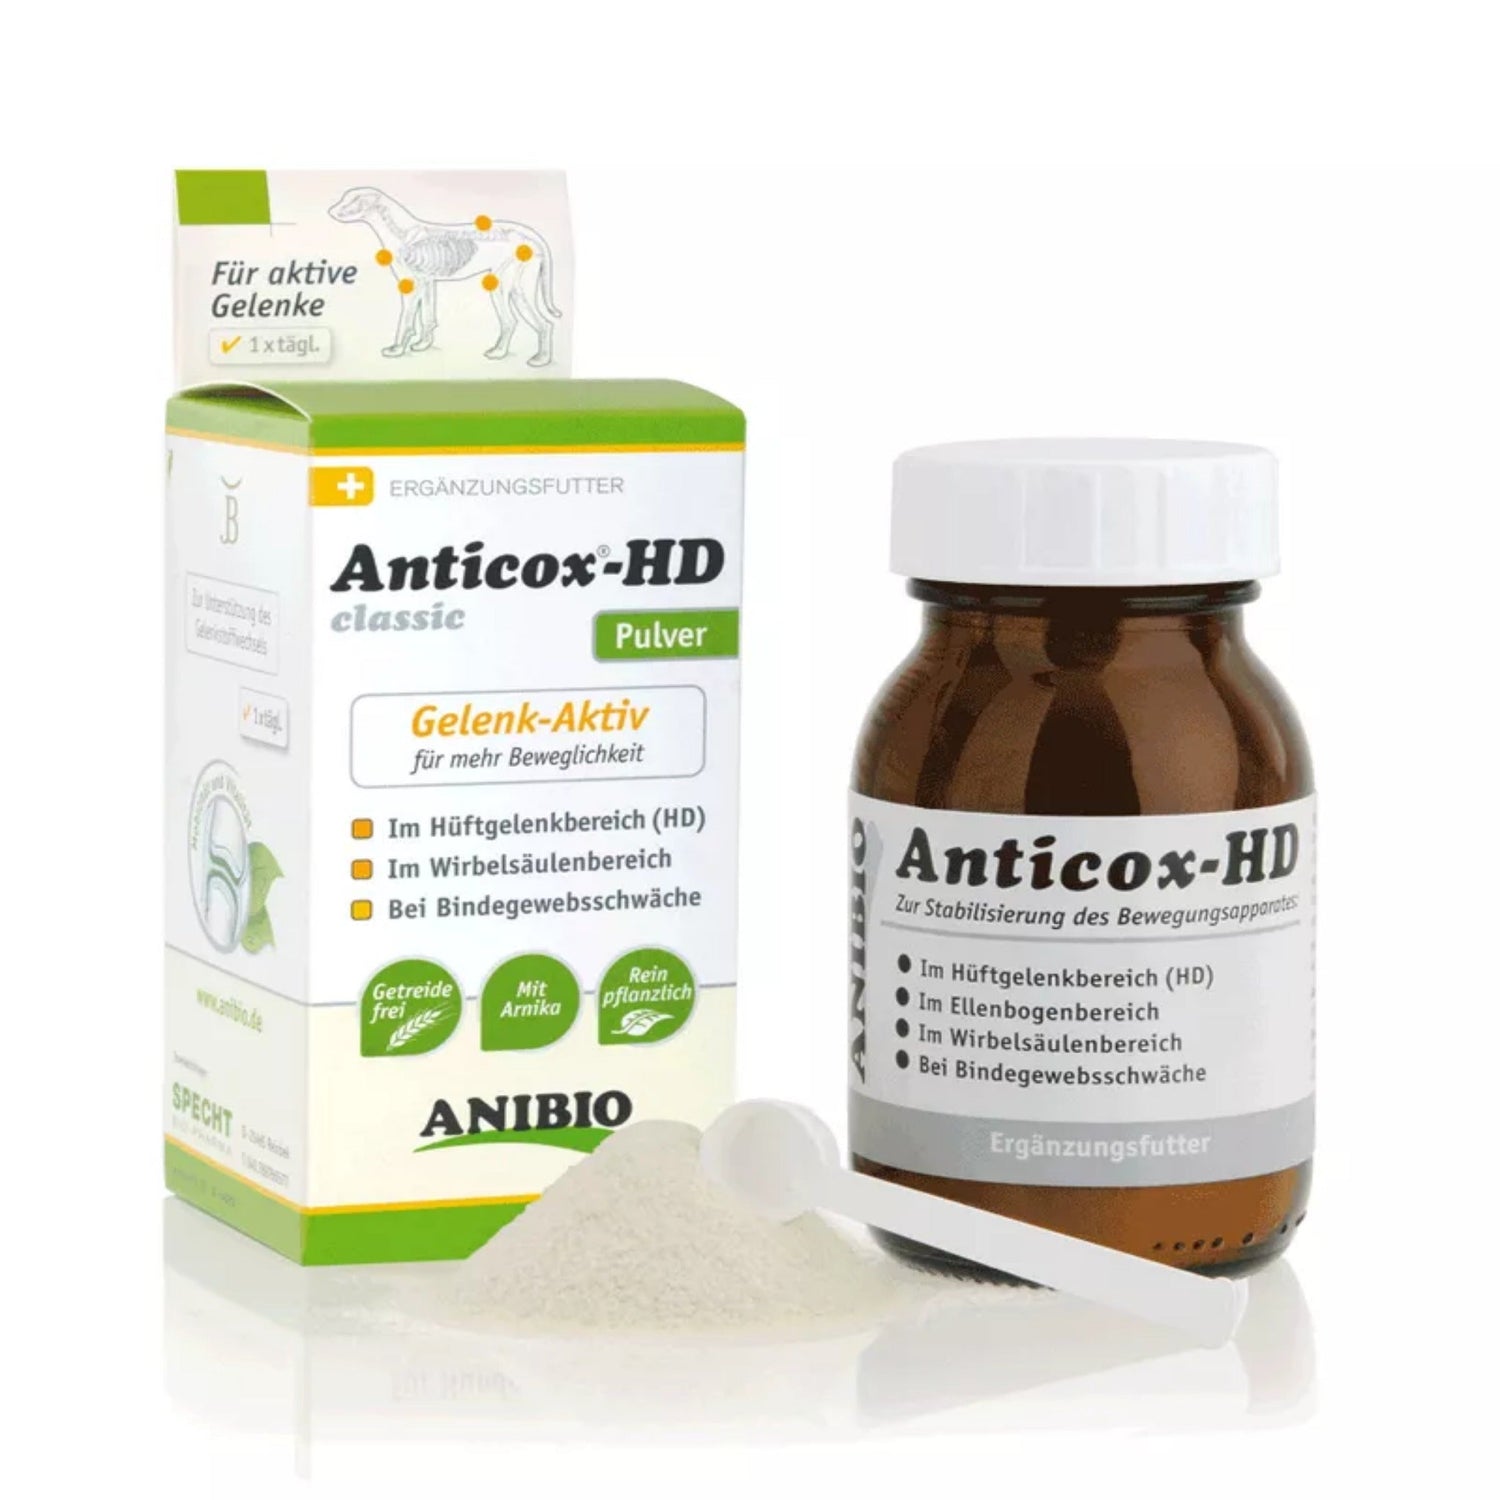 ANIBIO Anticox-HD classic Pulver - Woofshack